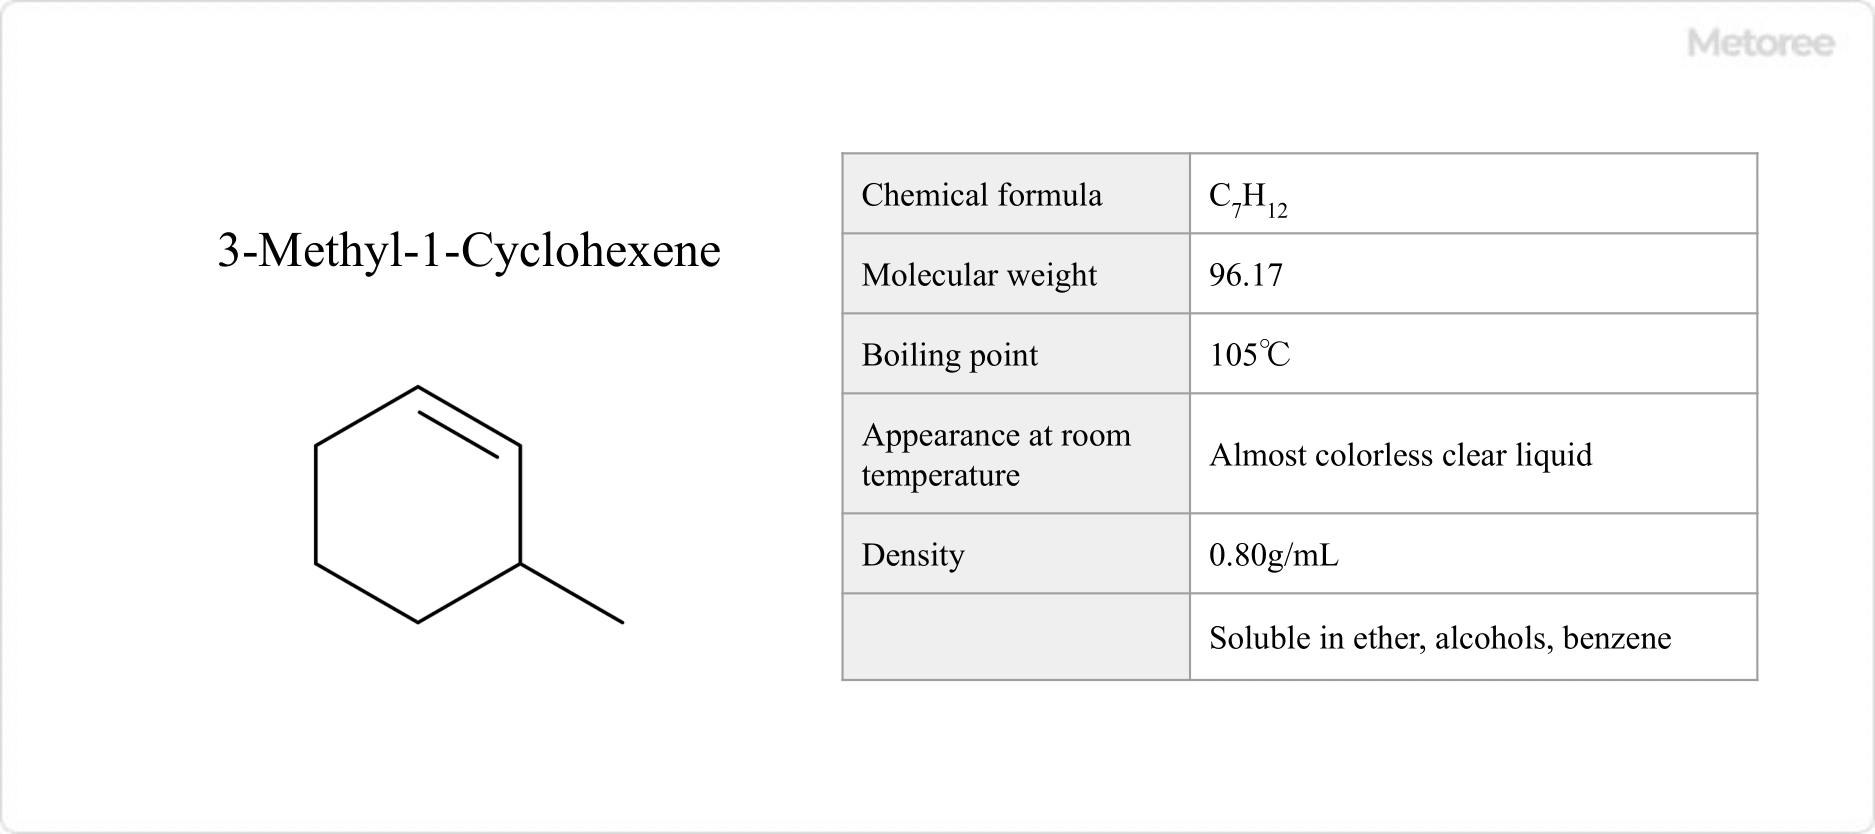 Figure 2. Basic information on 3-methyl-1-cyclohexene